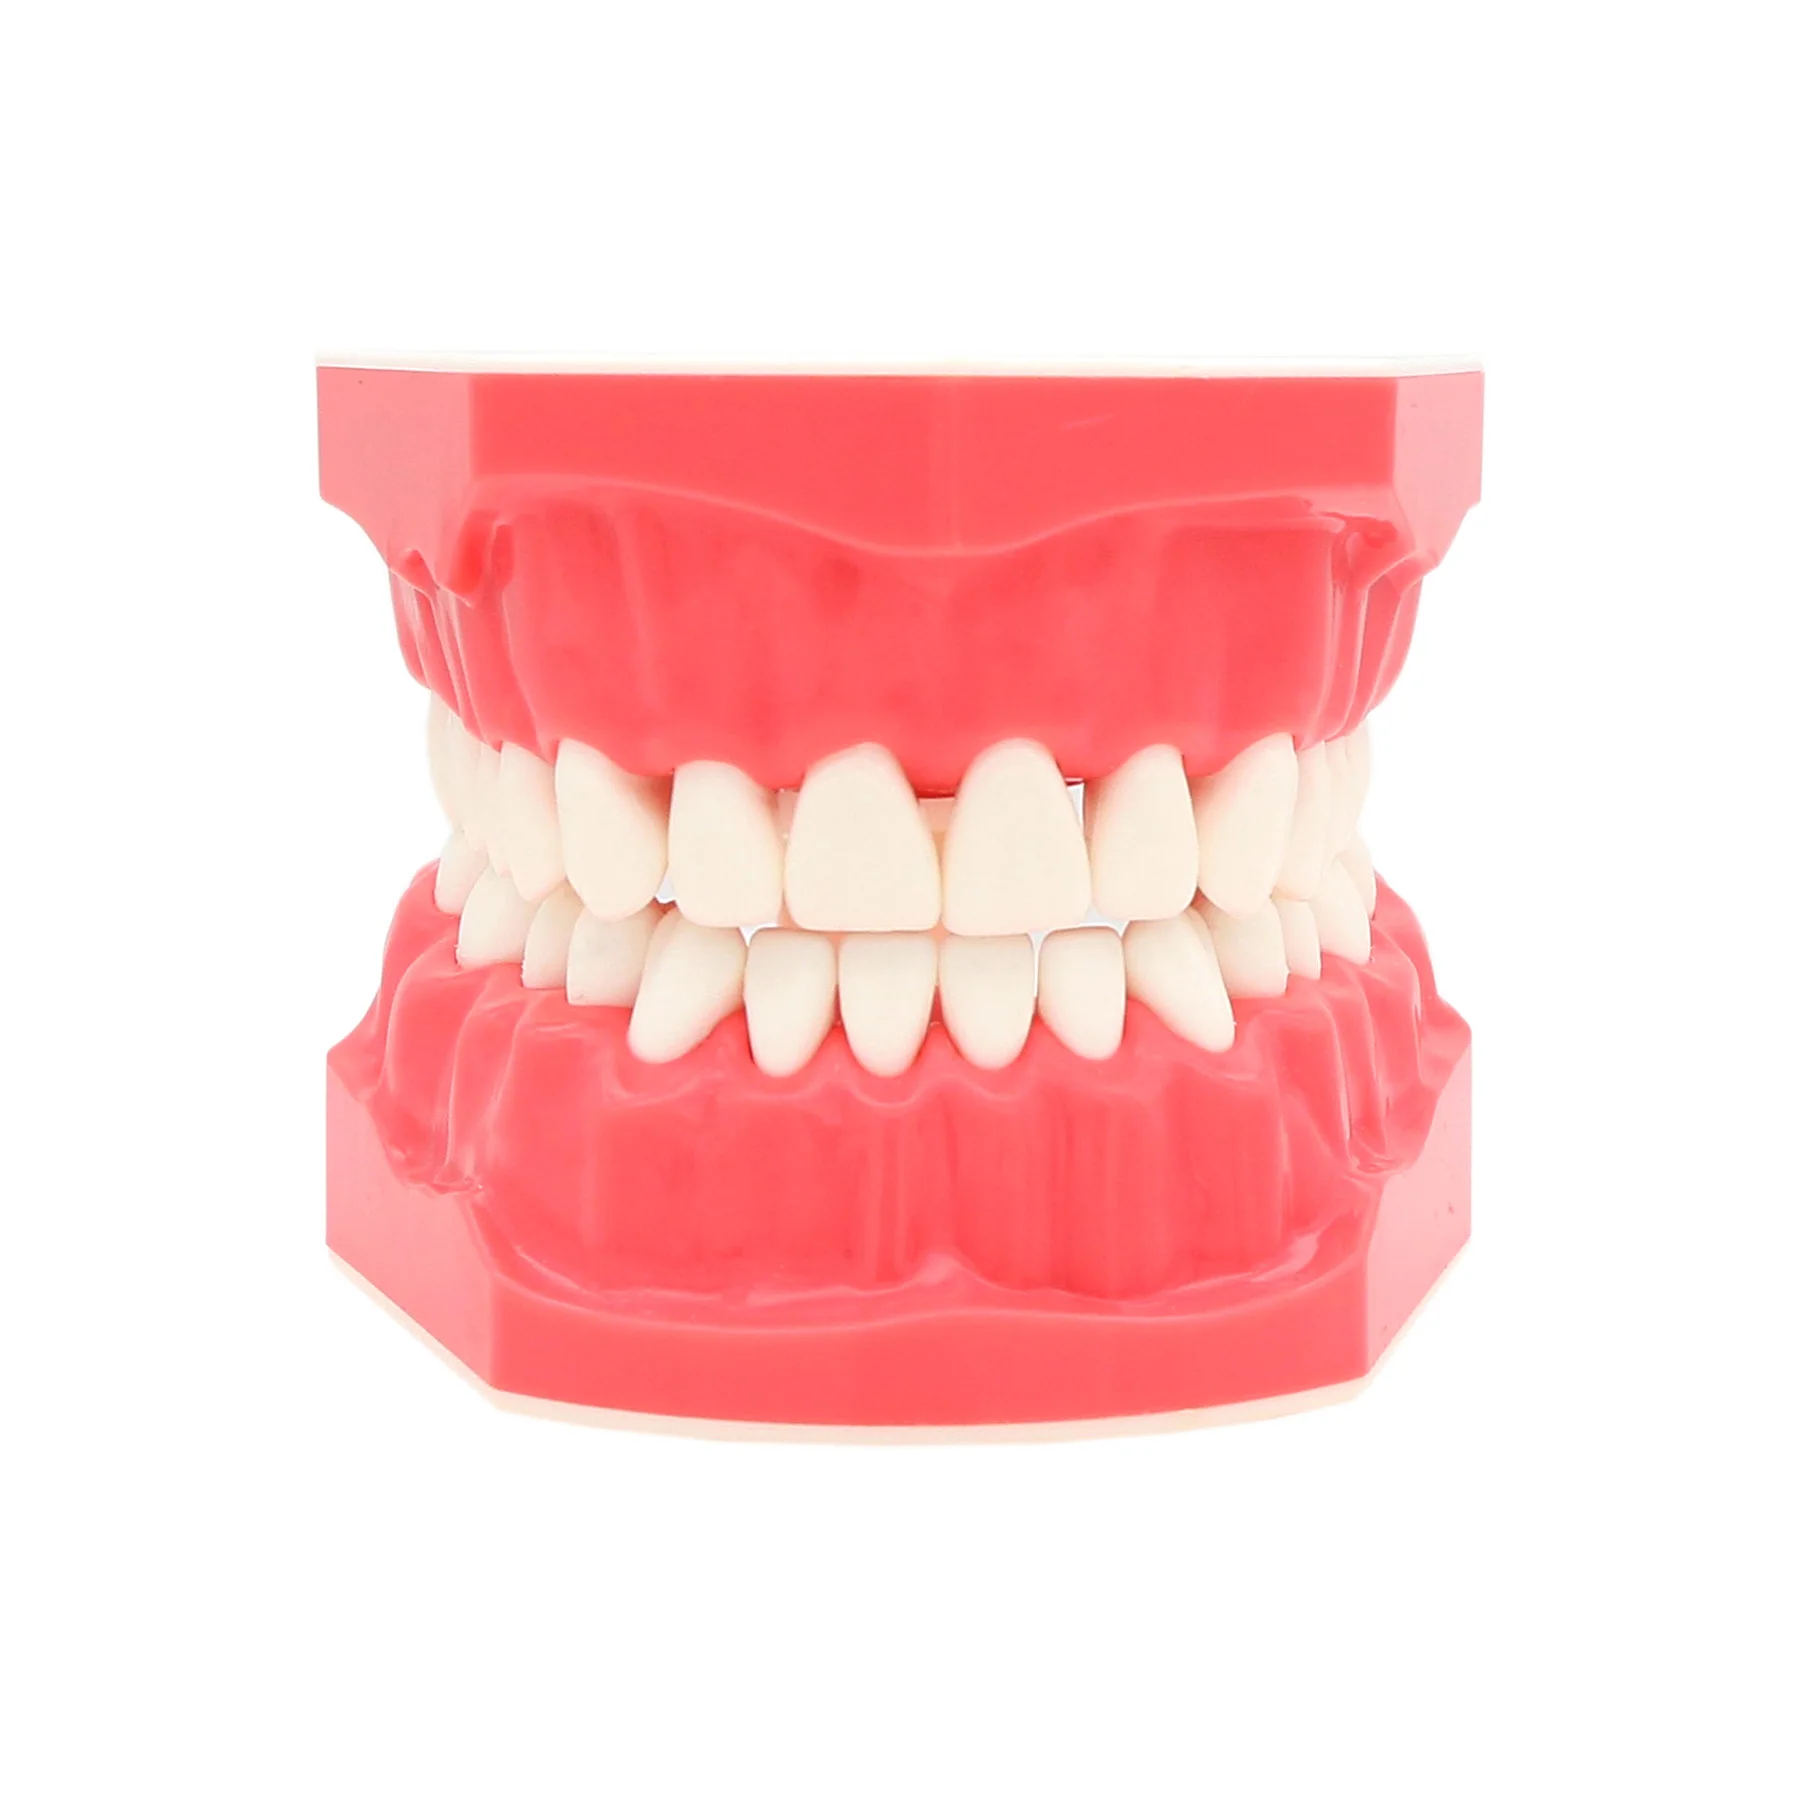 1:1 Dental Teeth Model Brushing Flossing Practice Model For Child Adult Studying Teaching